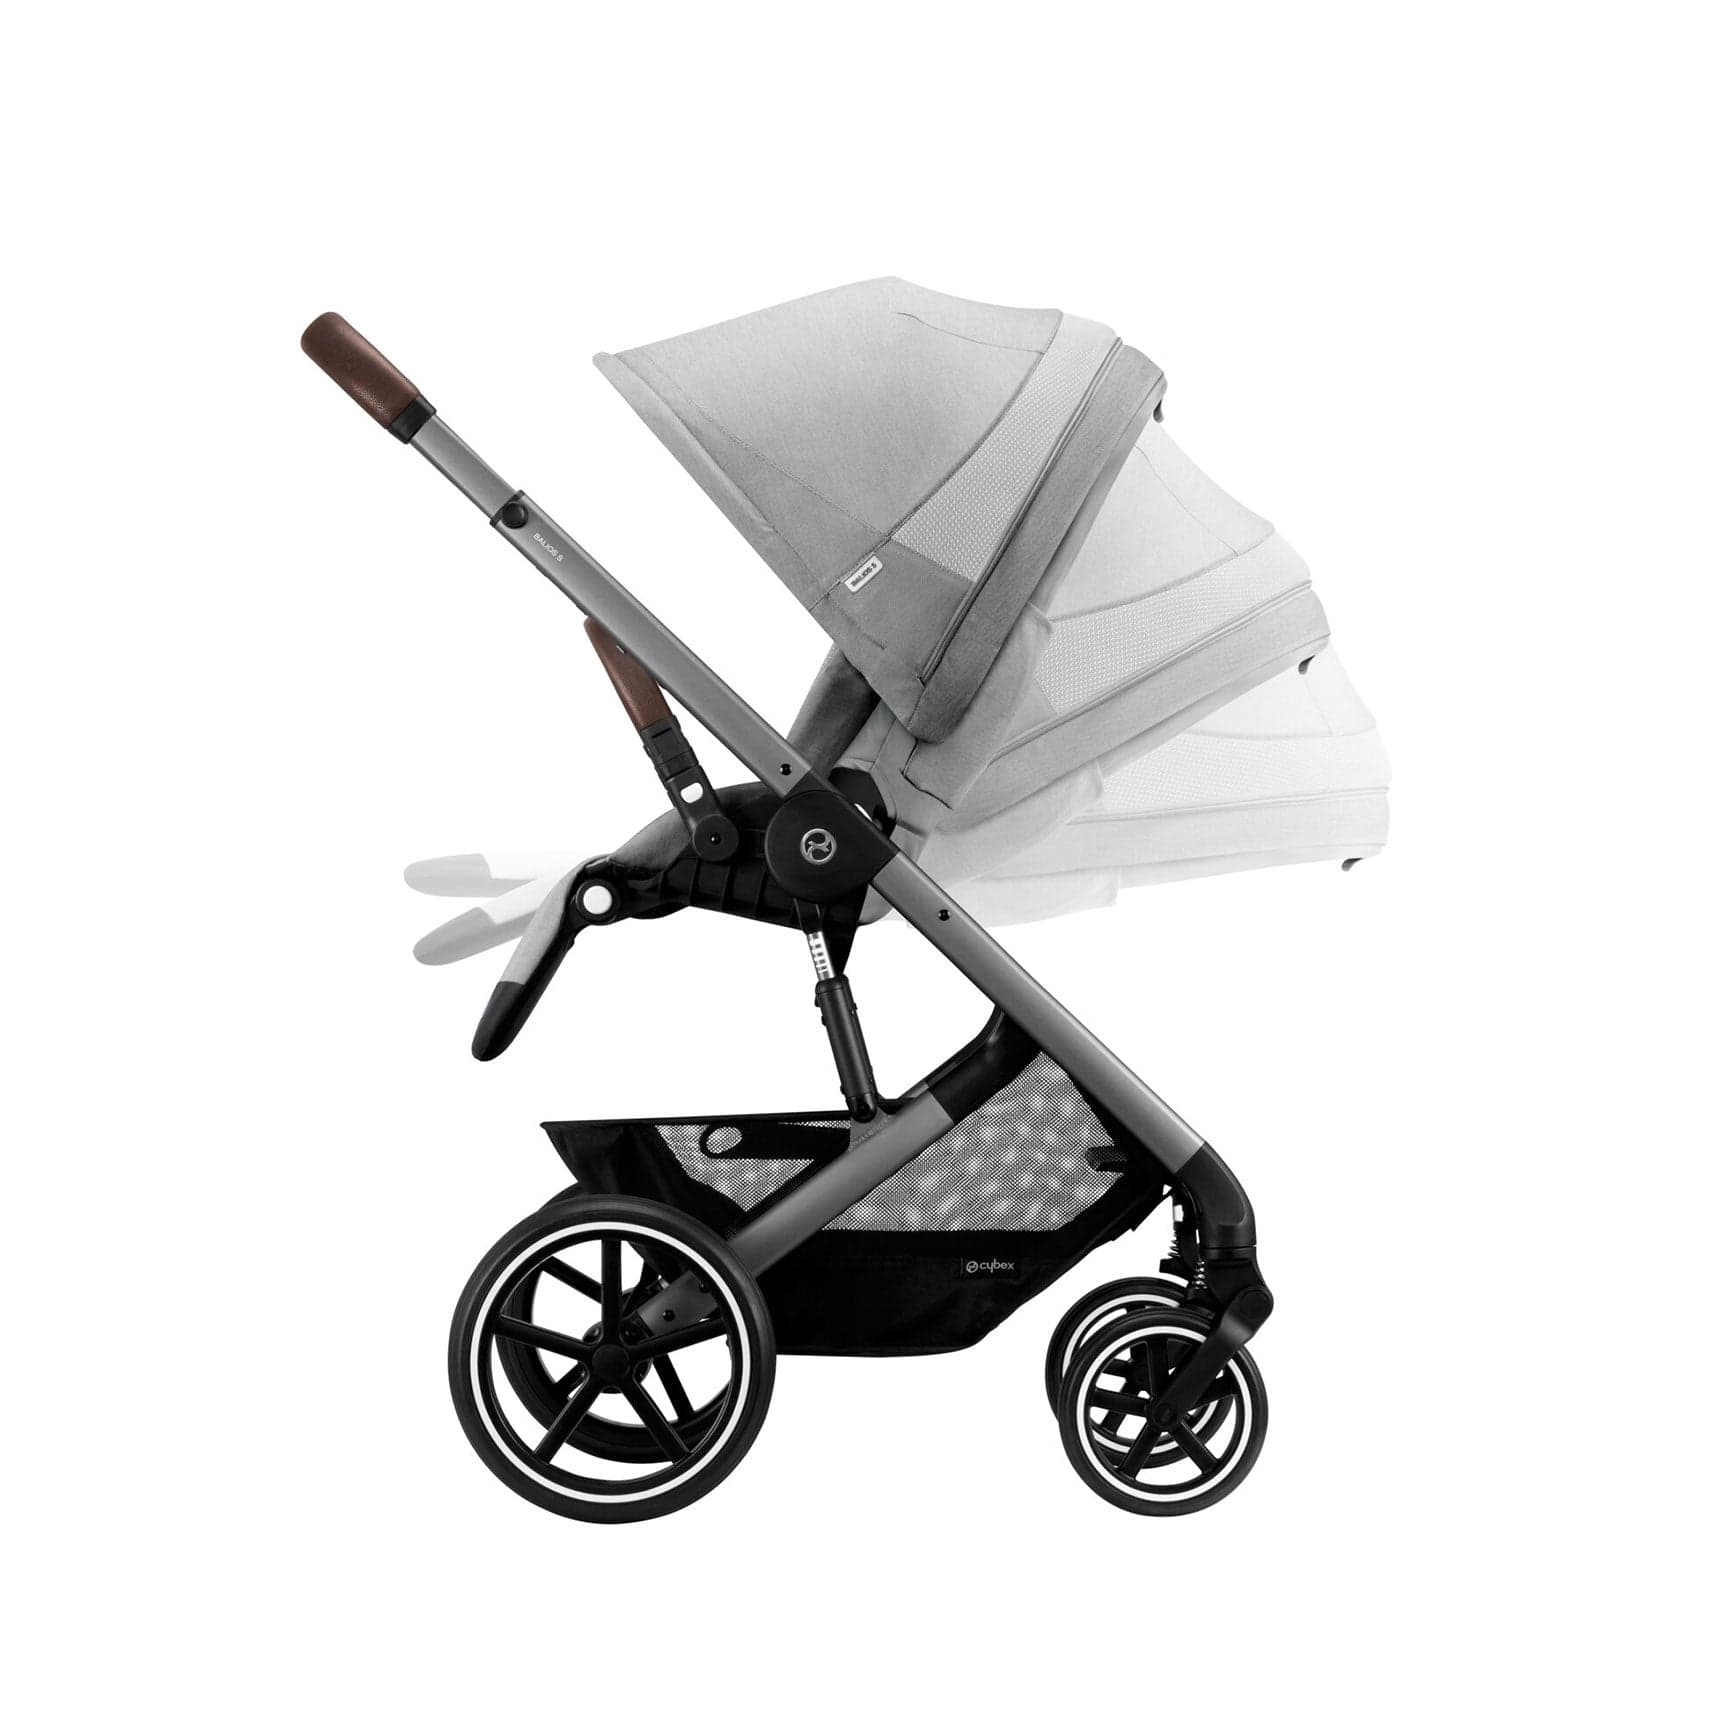 Cybex Baby Strollers Cybex Balios S Lux Essential Bundle - Silver/Lava Grey 12751-SLV-LAV-GRY